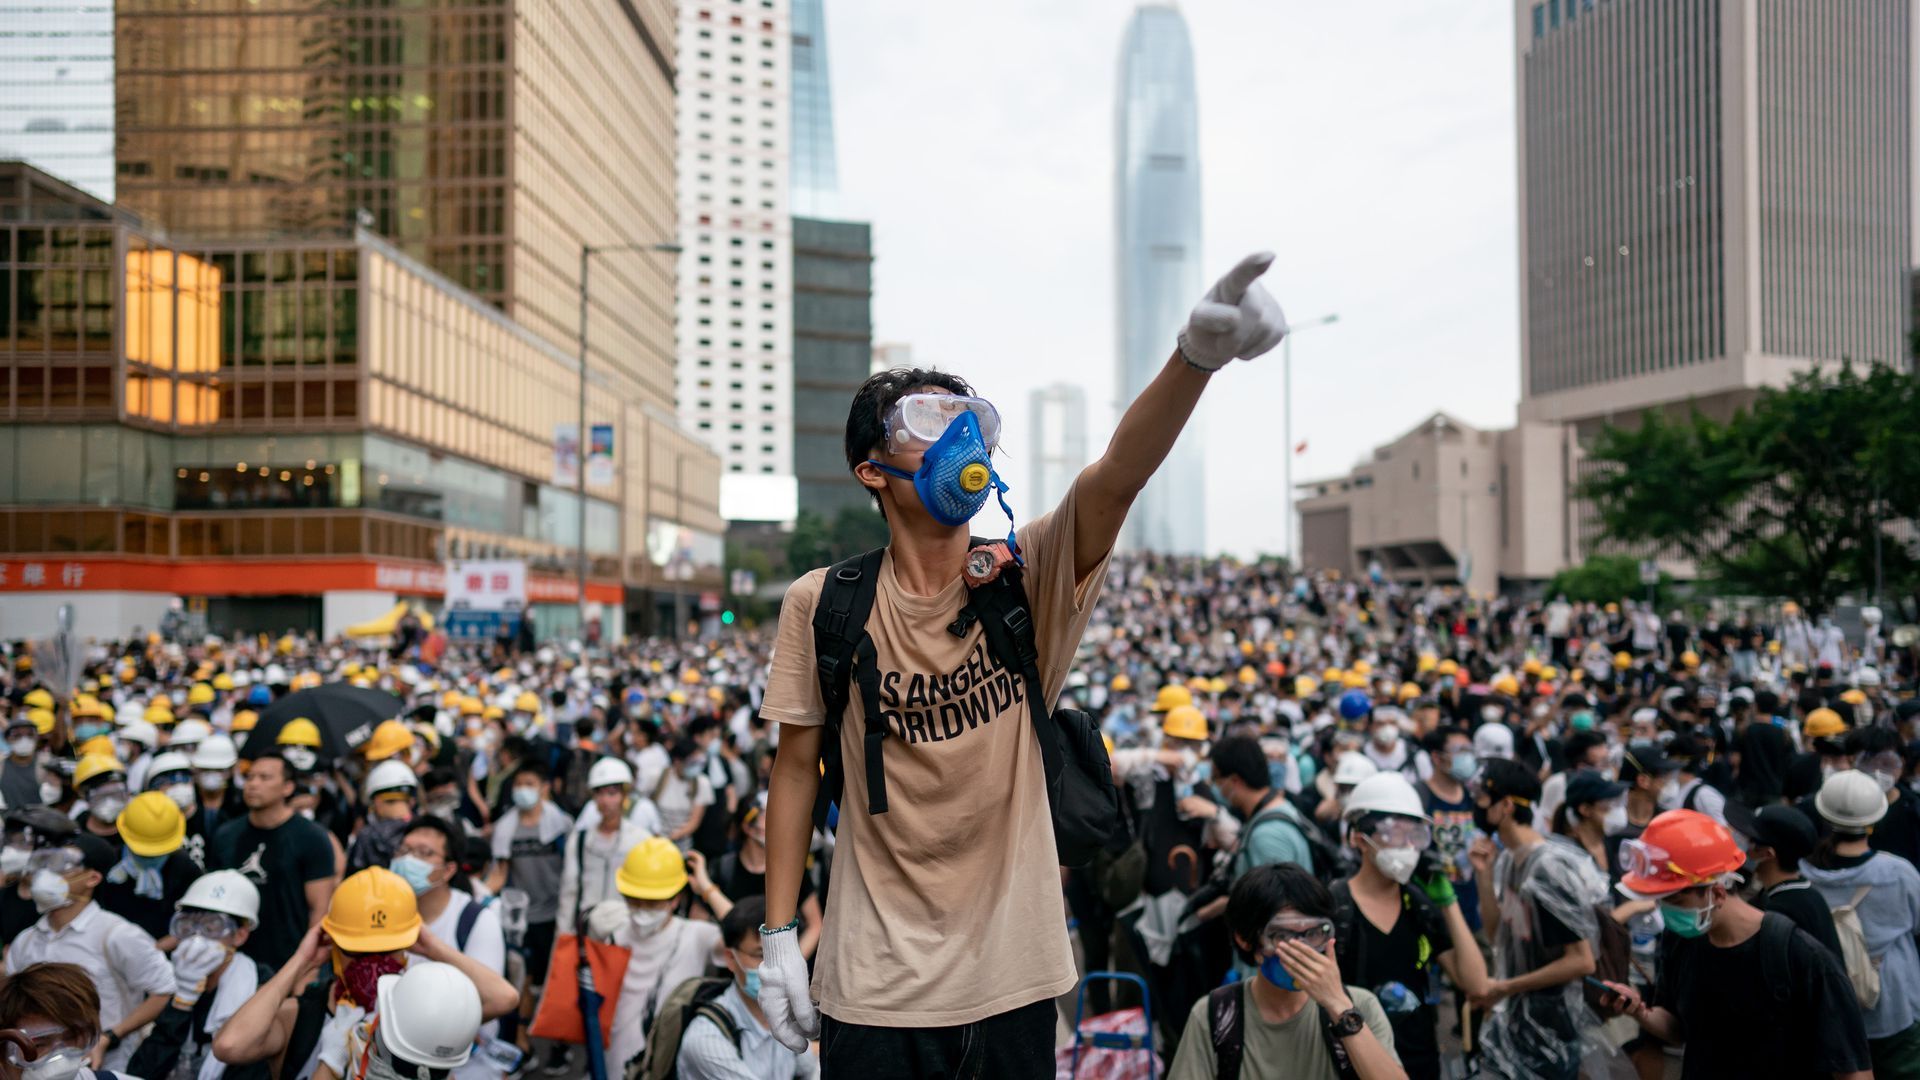 Hong Kong protestors stand up to China amid fears of crumbling autonomy